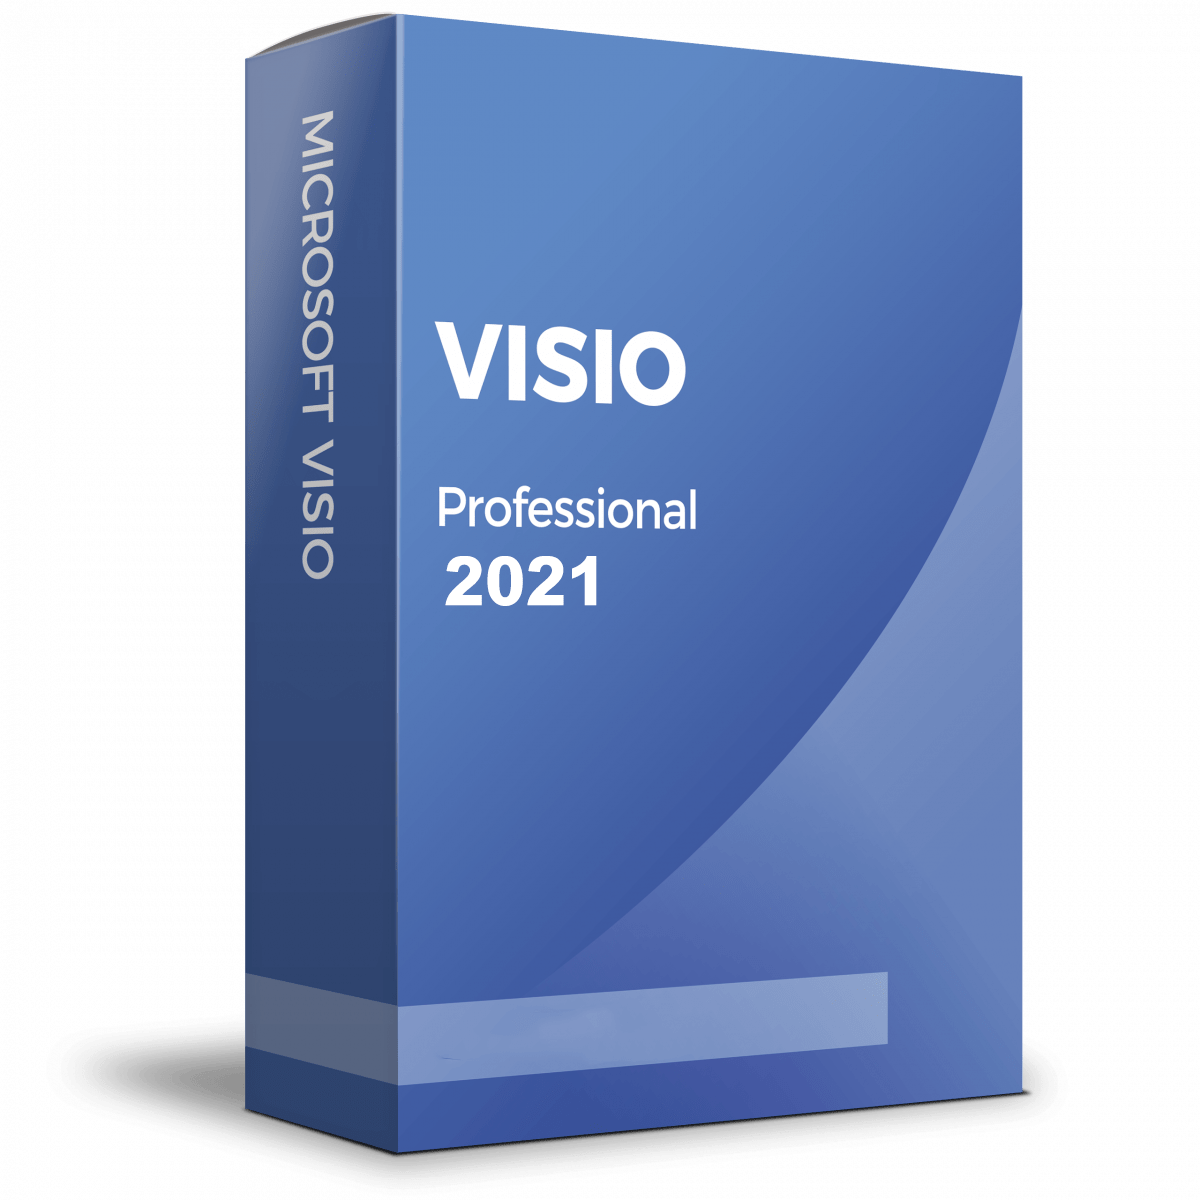 Microsoft Visio 2021 Professional (PC) 32/64 Bits (Retail)